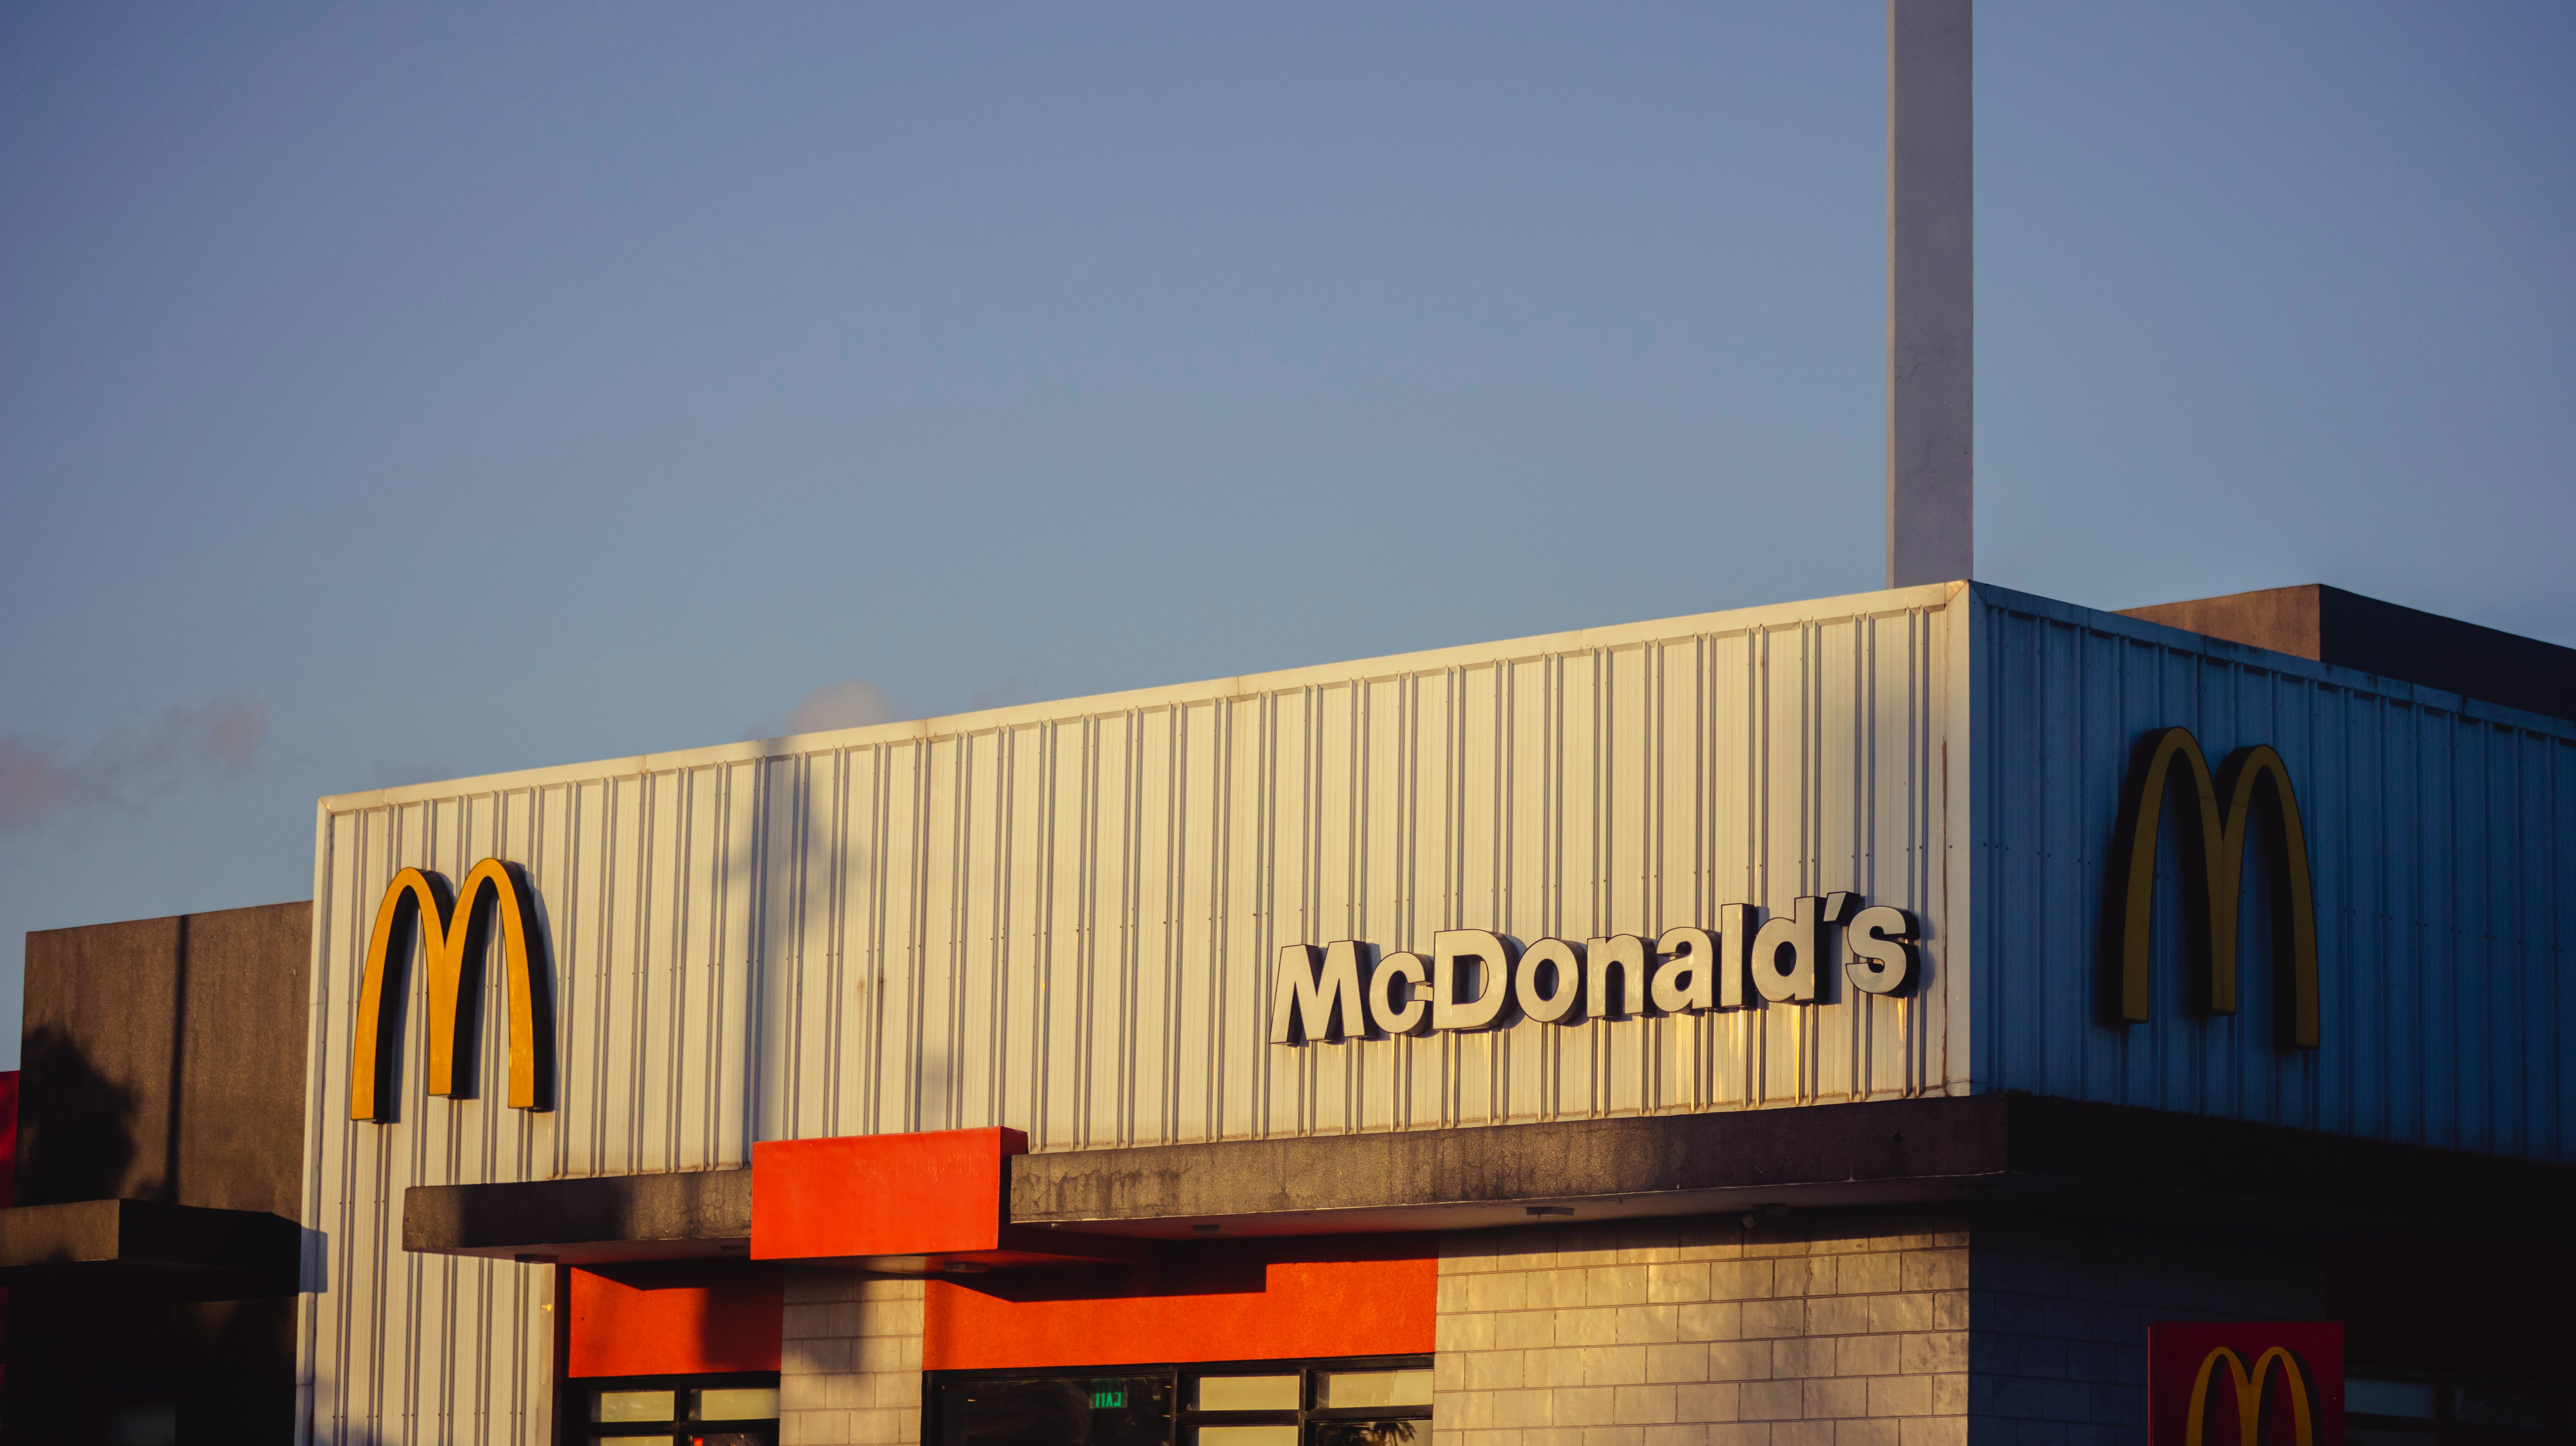 Restaurante McDonald's. | Fuente: Pexels